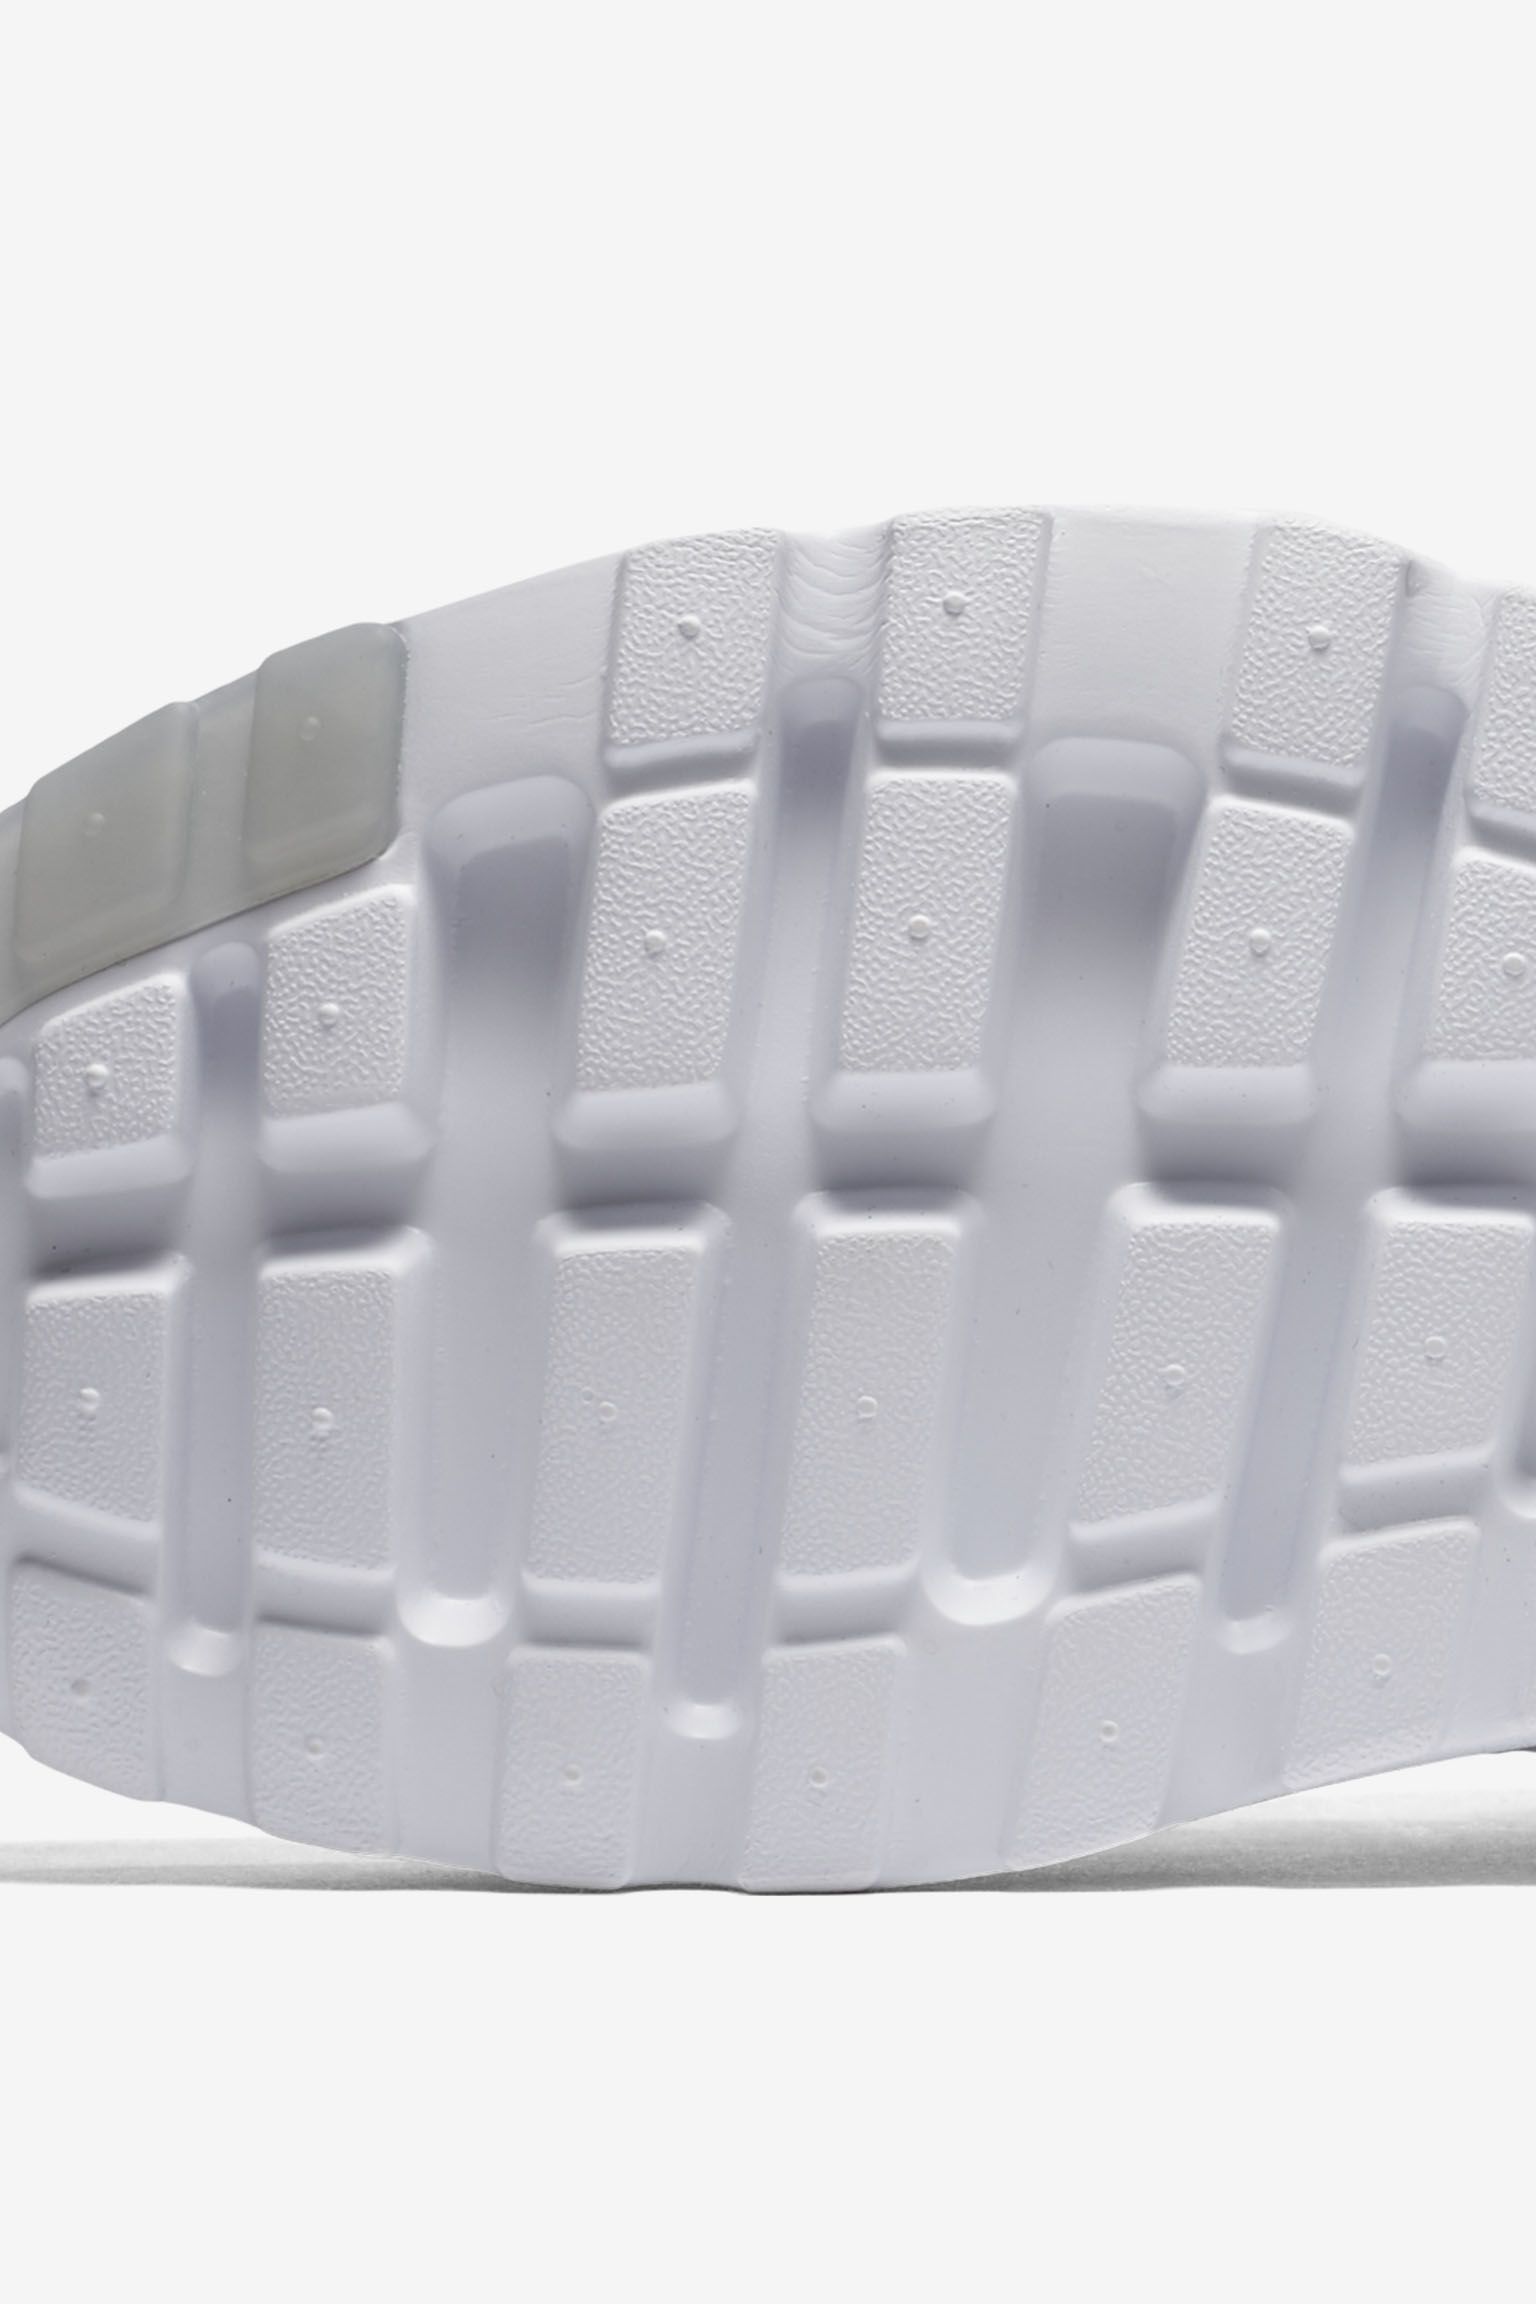 Nike Air Max Zero Triple White for Sale, Authenticity Guaranteed